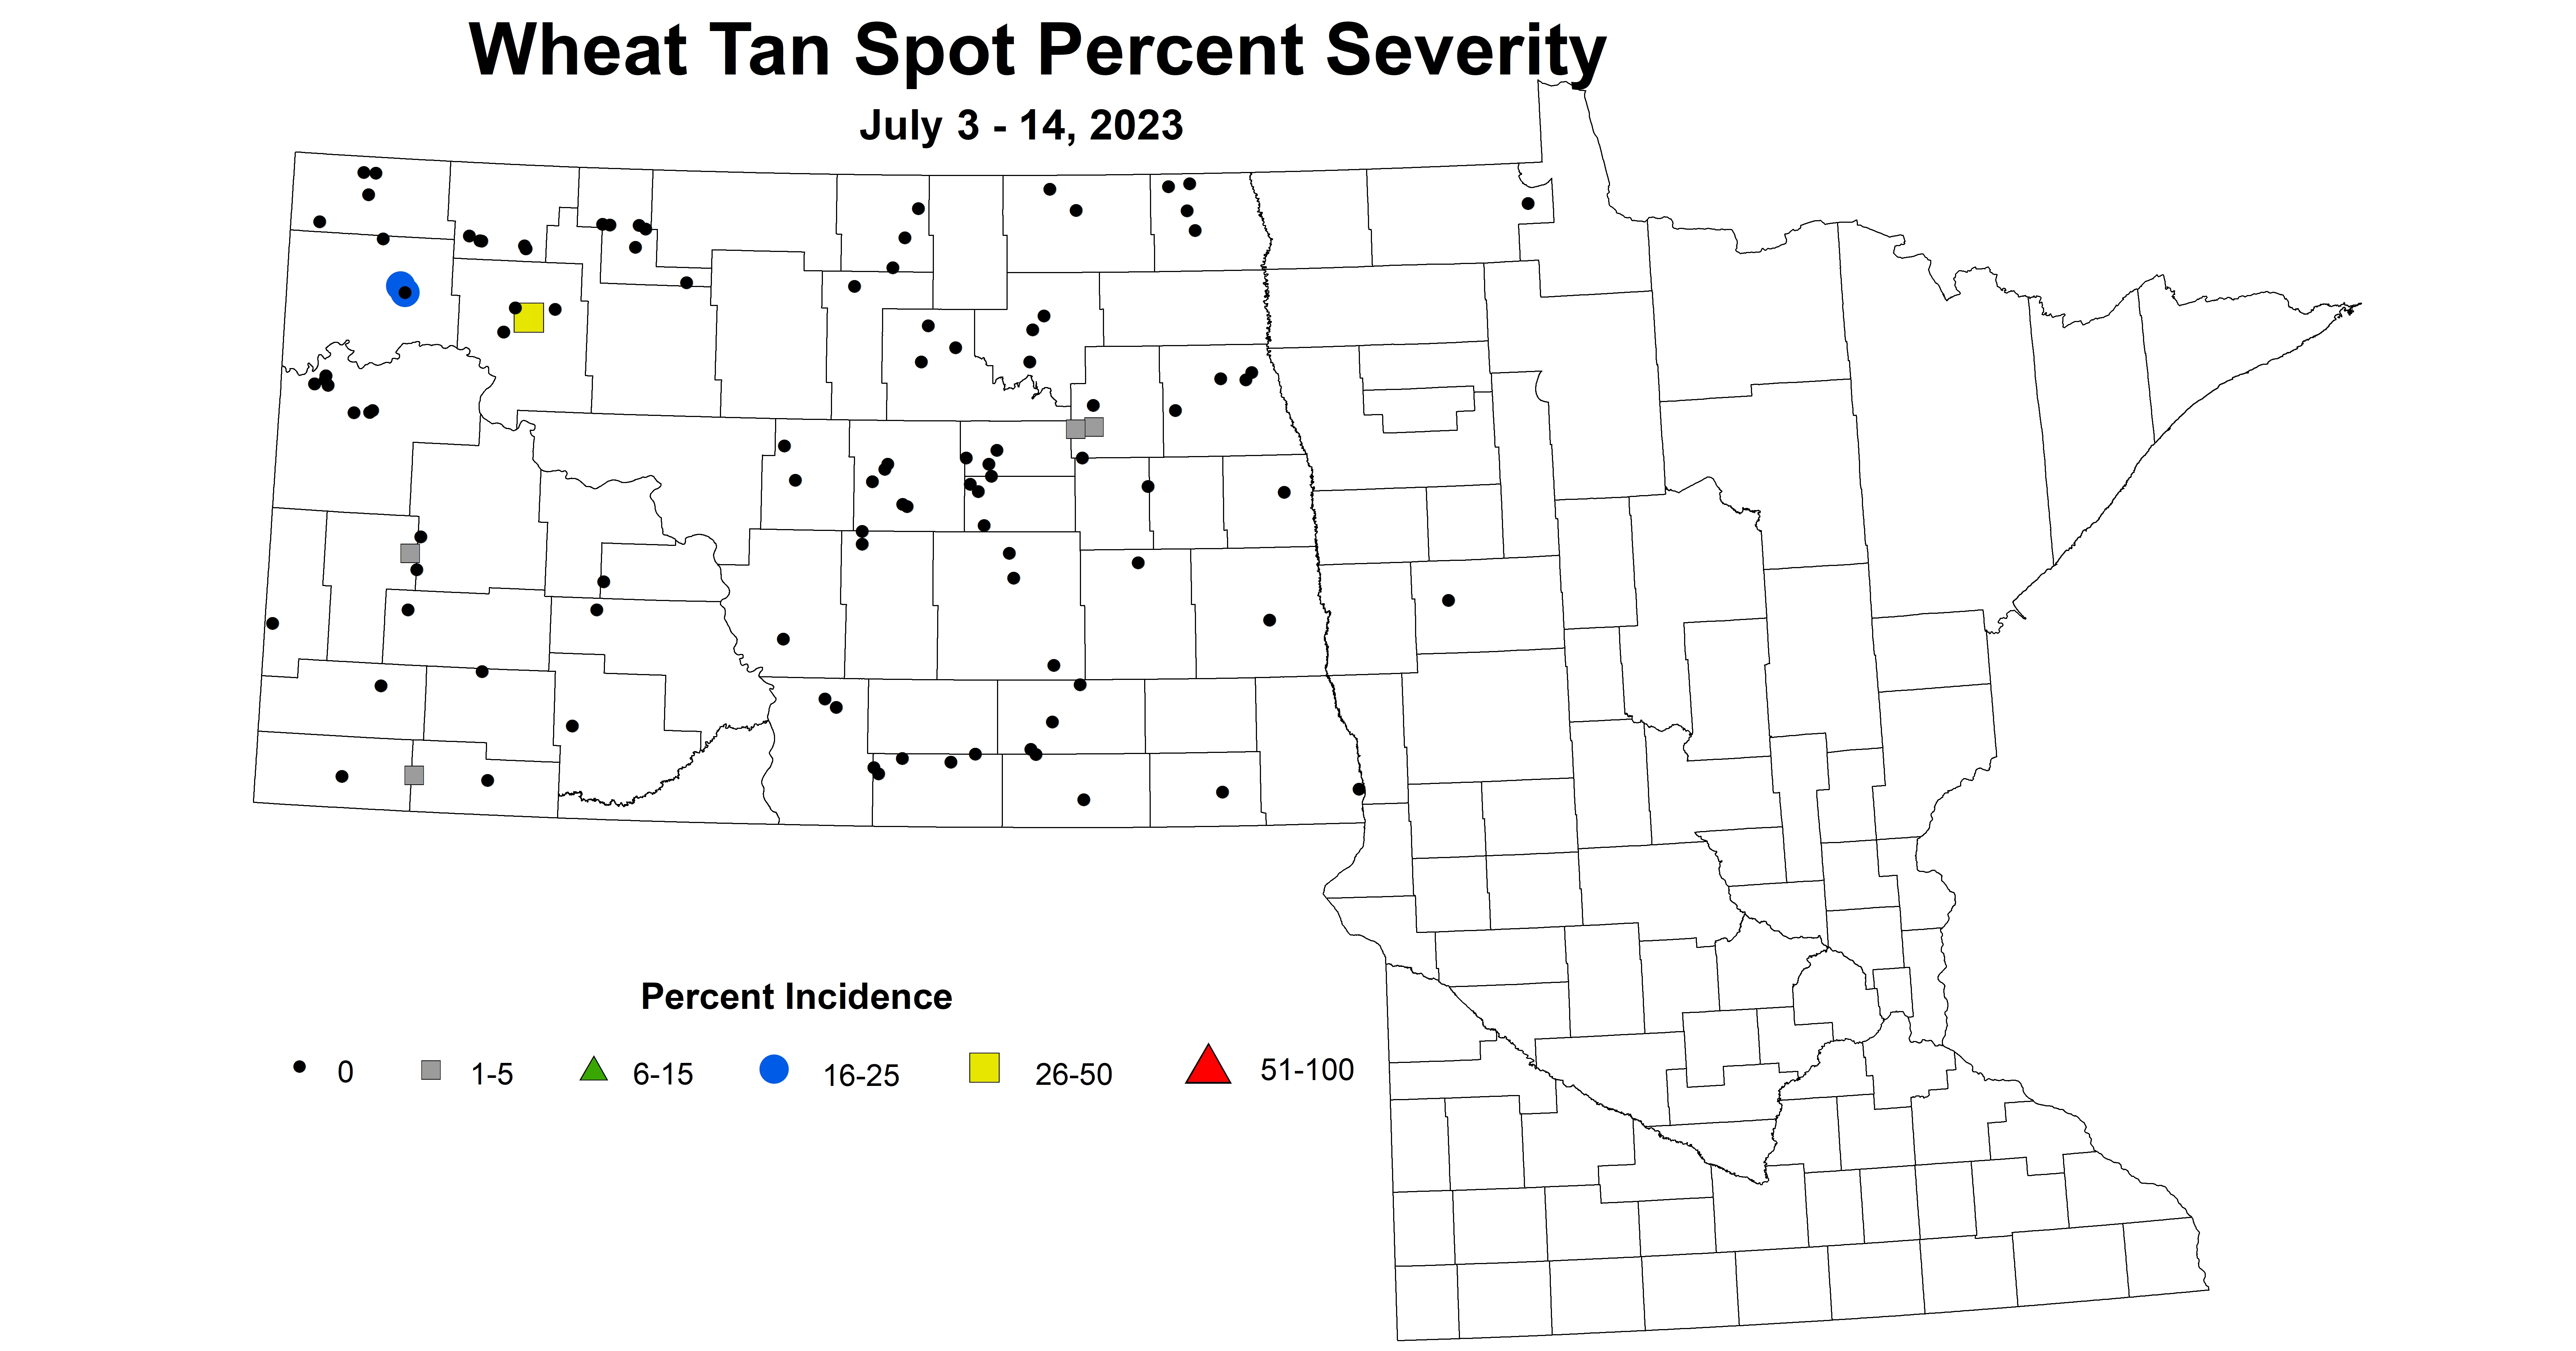 wheat tan spot severity July 3-14 2023